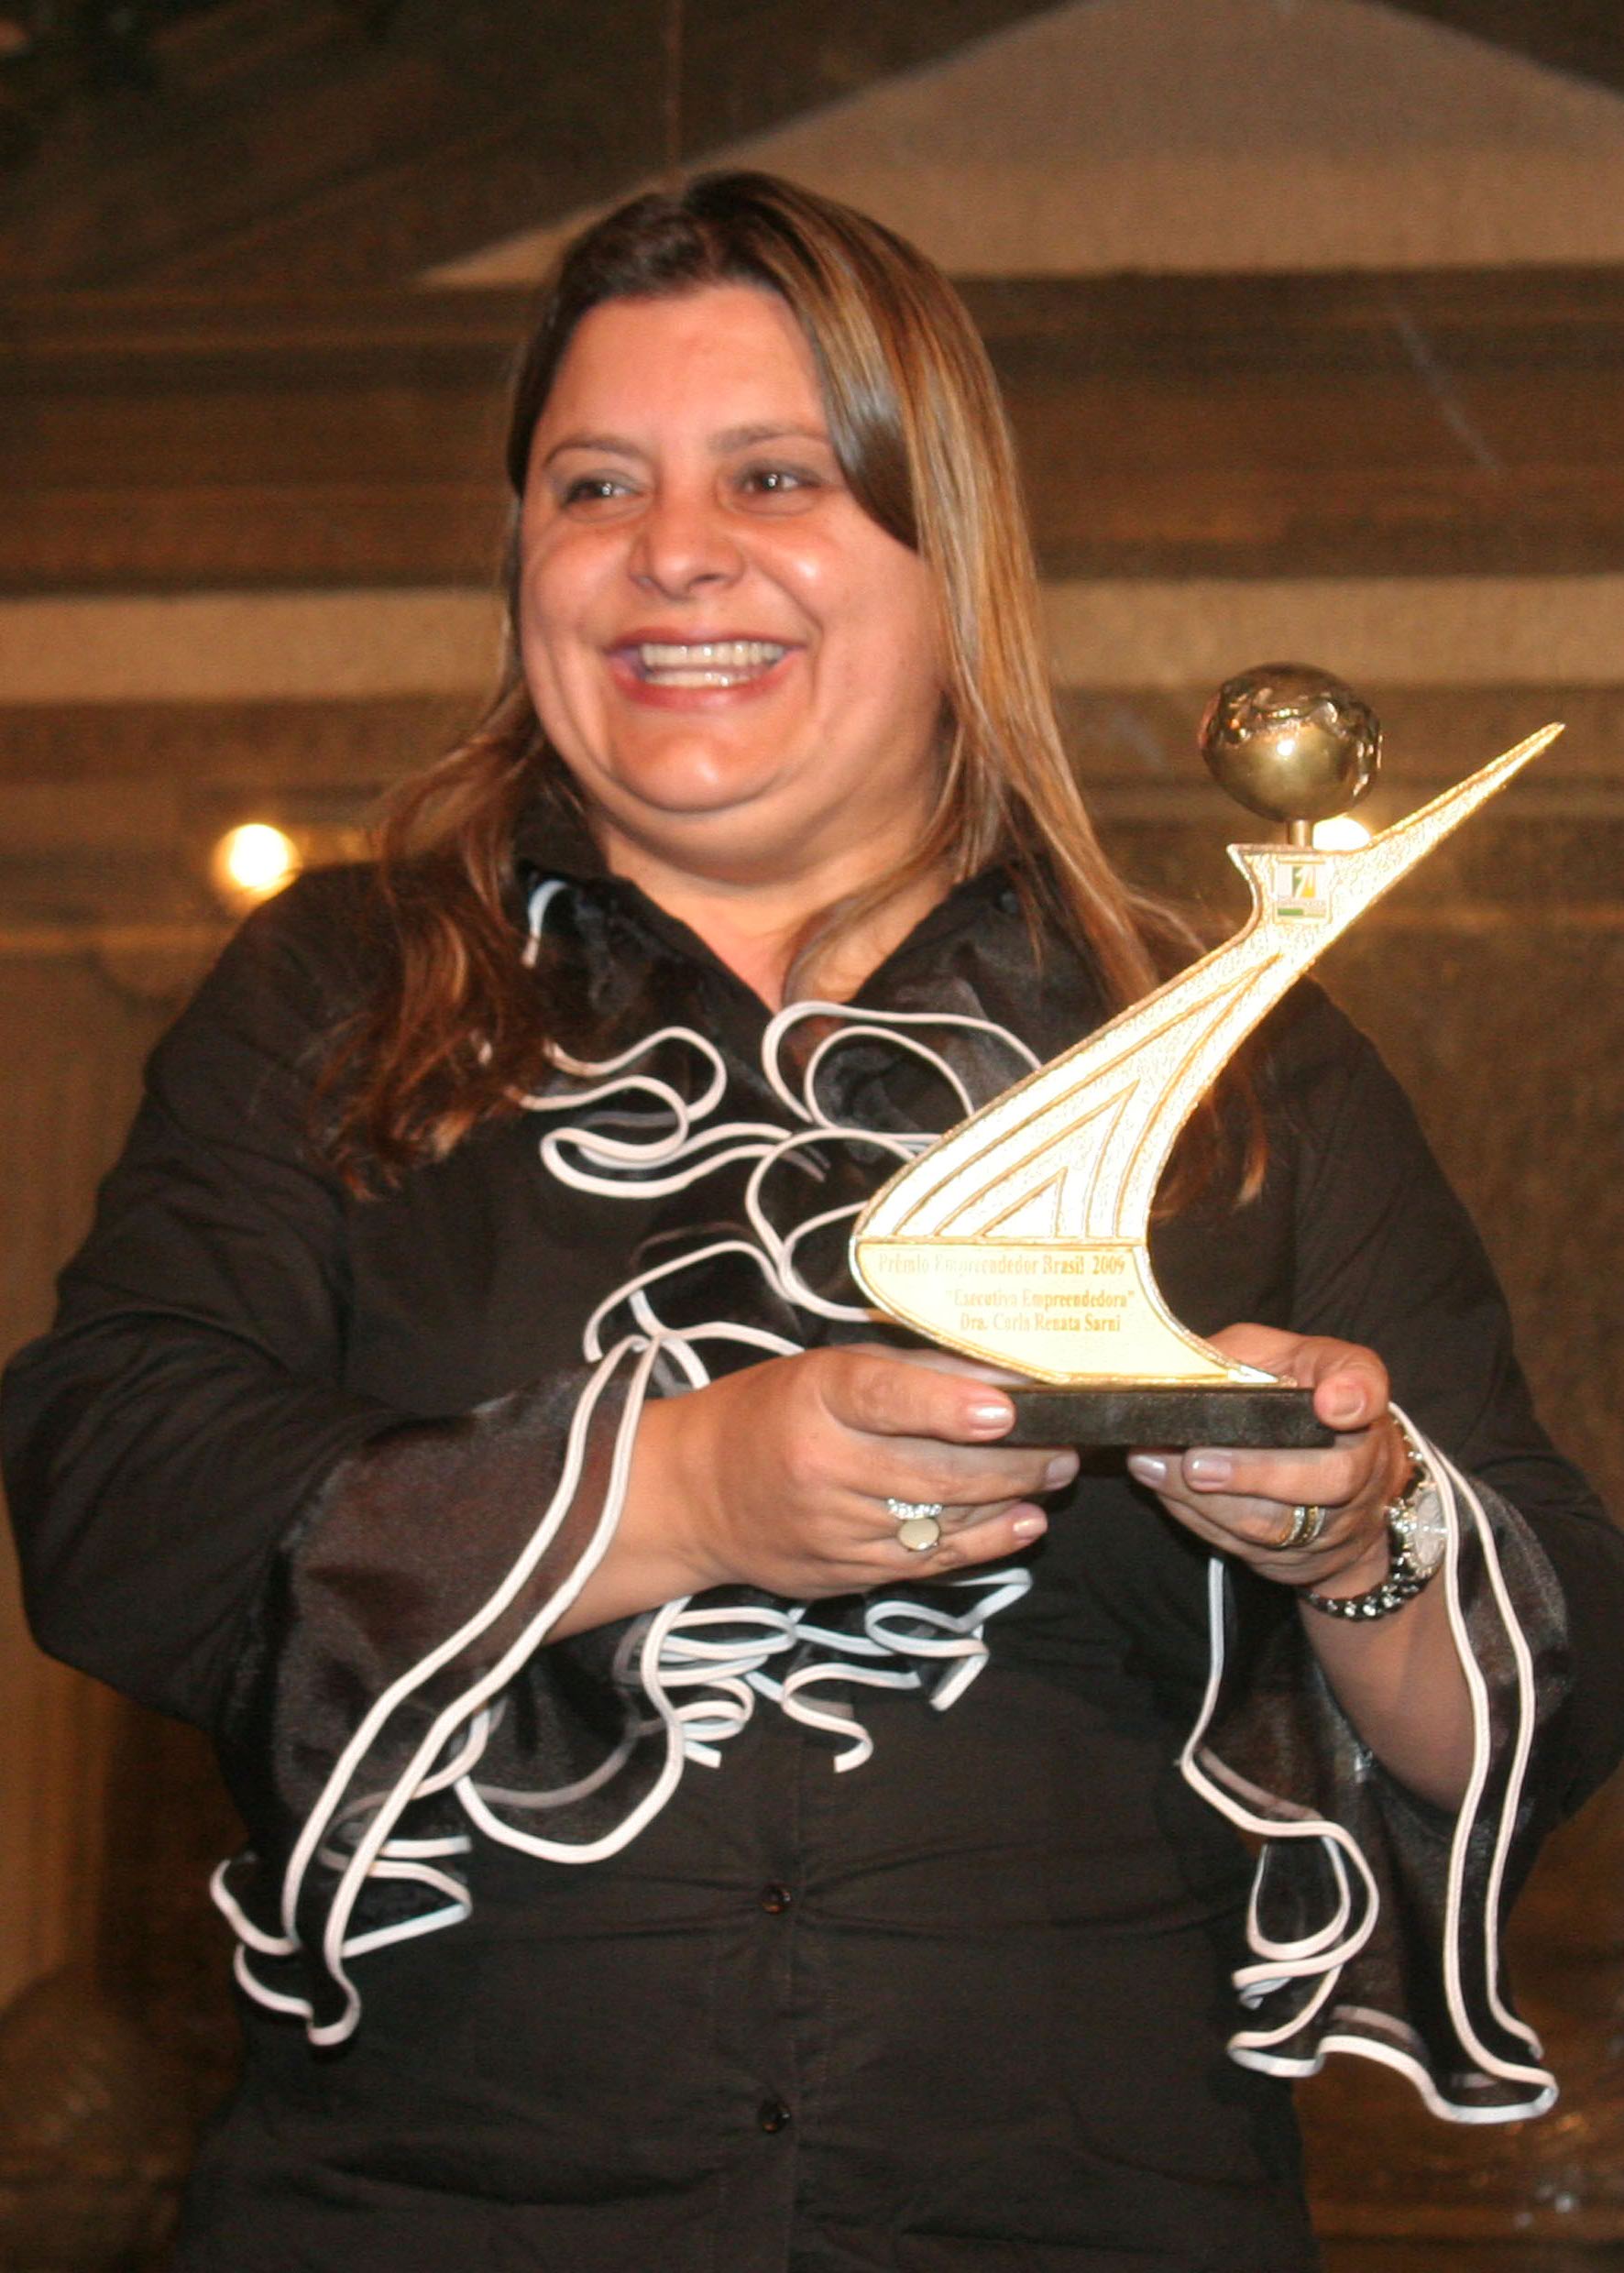 Dra. Carla Renata Sarni - fundadora do grupo Sorridents.